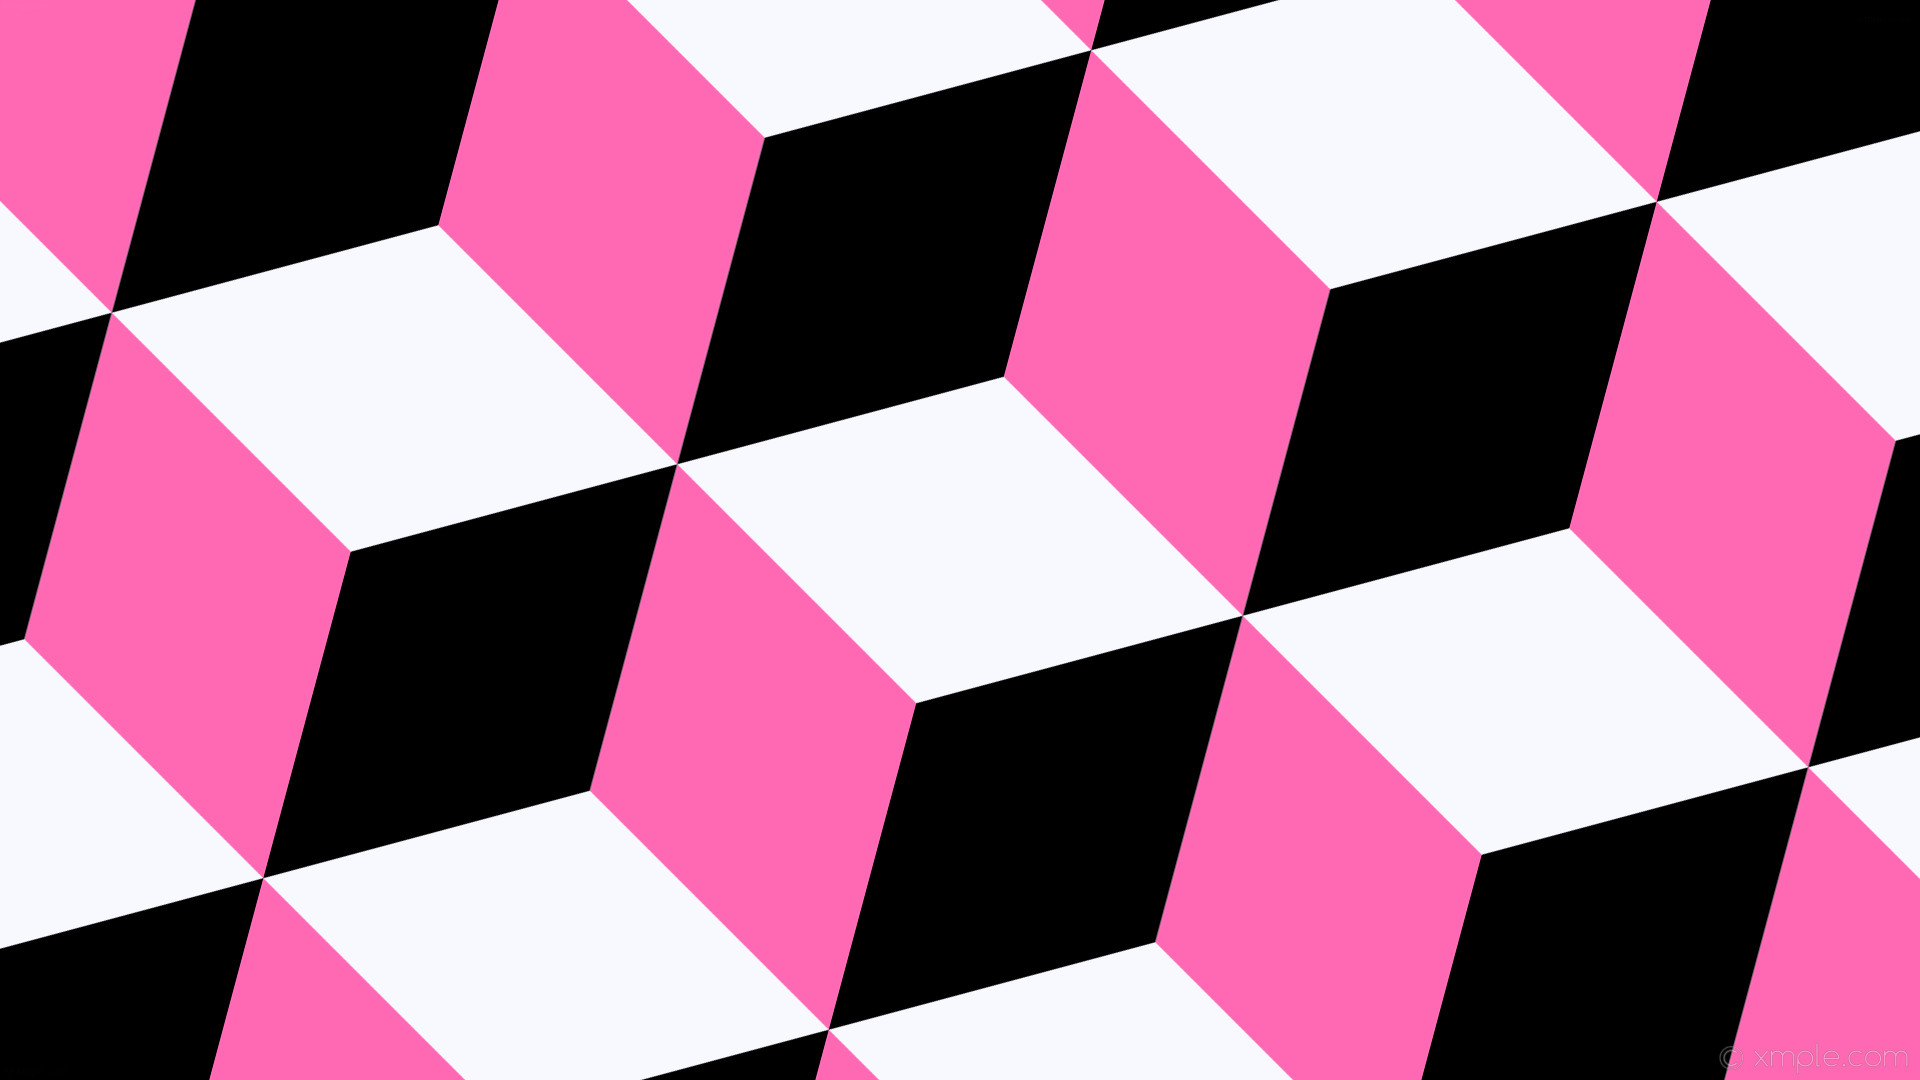 1920x1080 wallpaper white 3d cubes pink black ghost white hot pink #f8f8ff #ff69b4  #000000